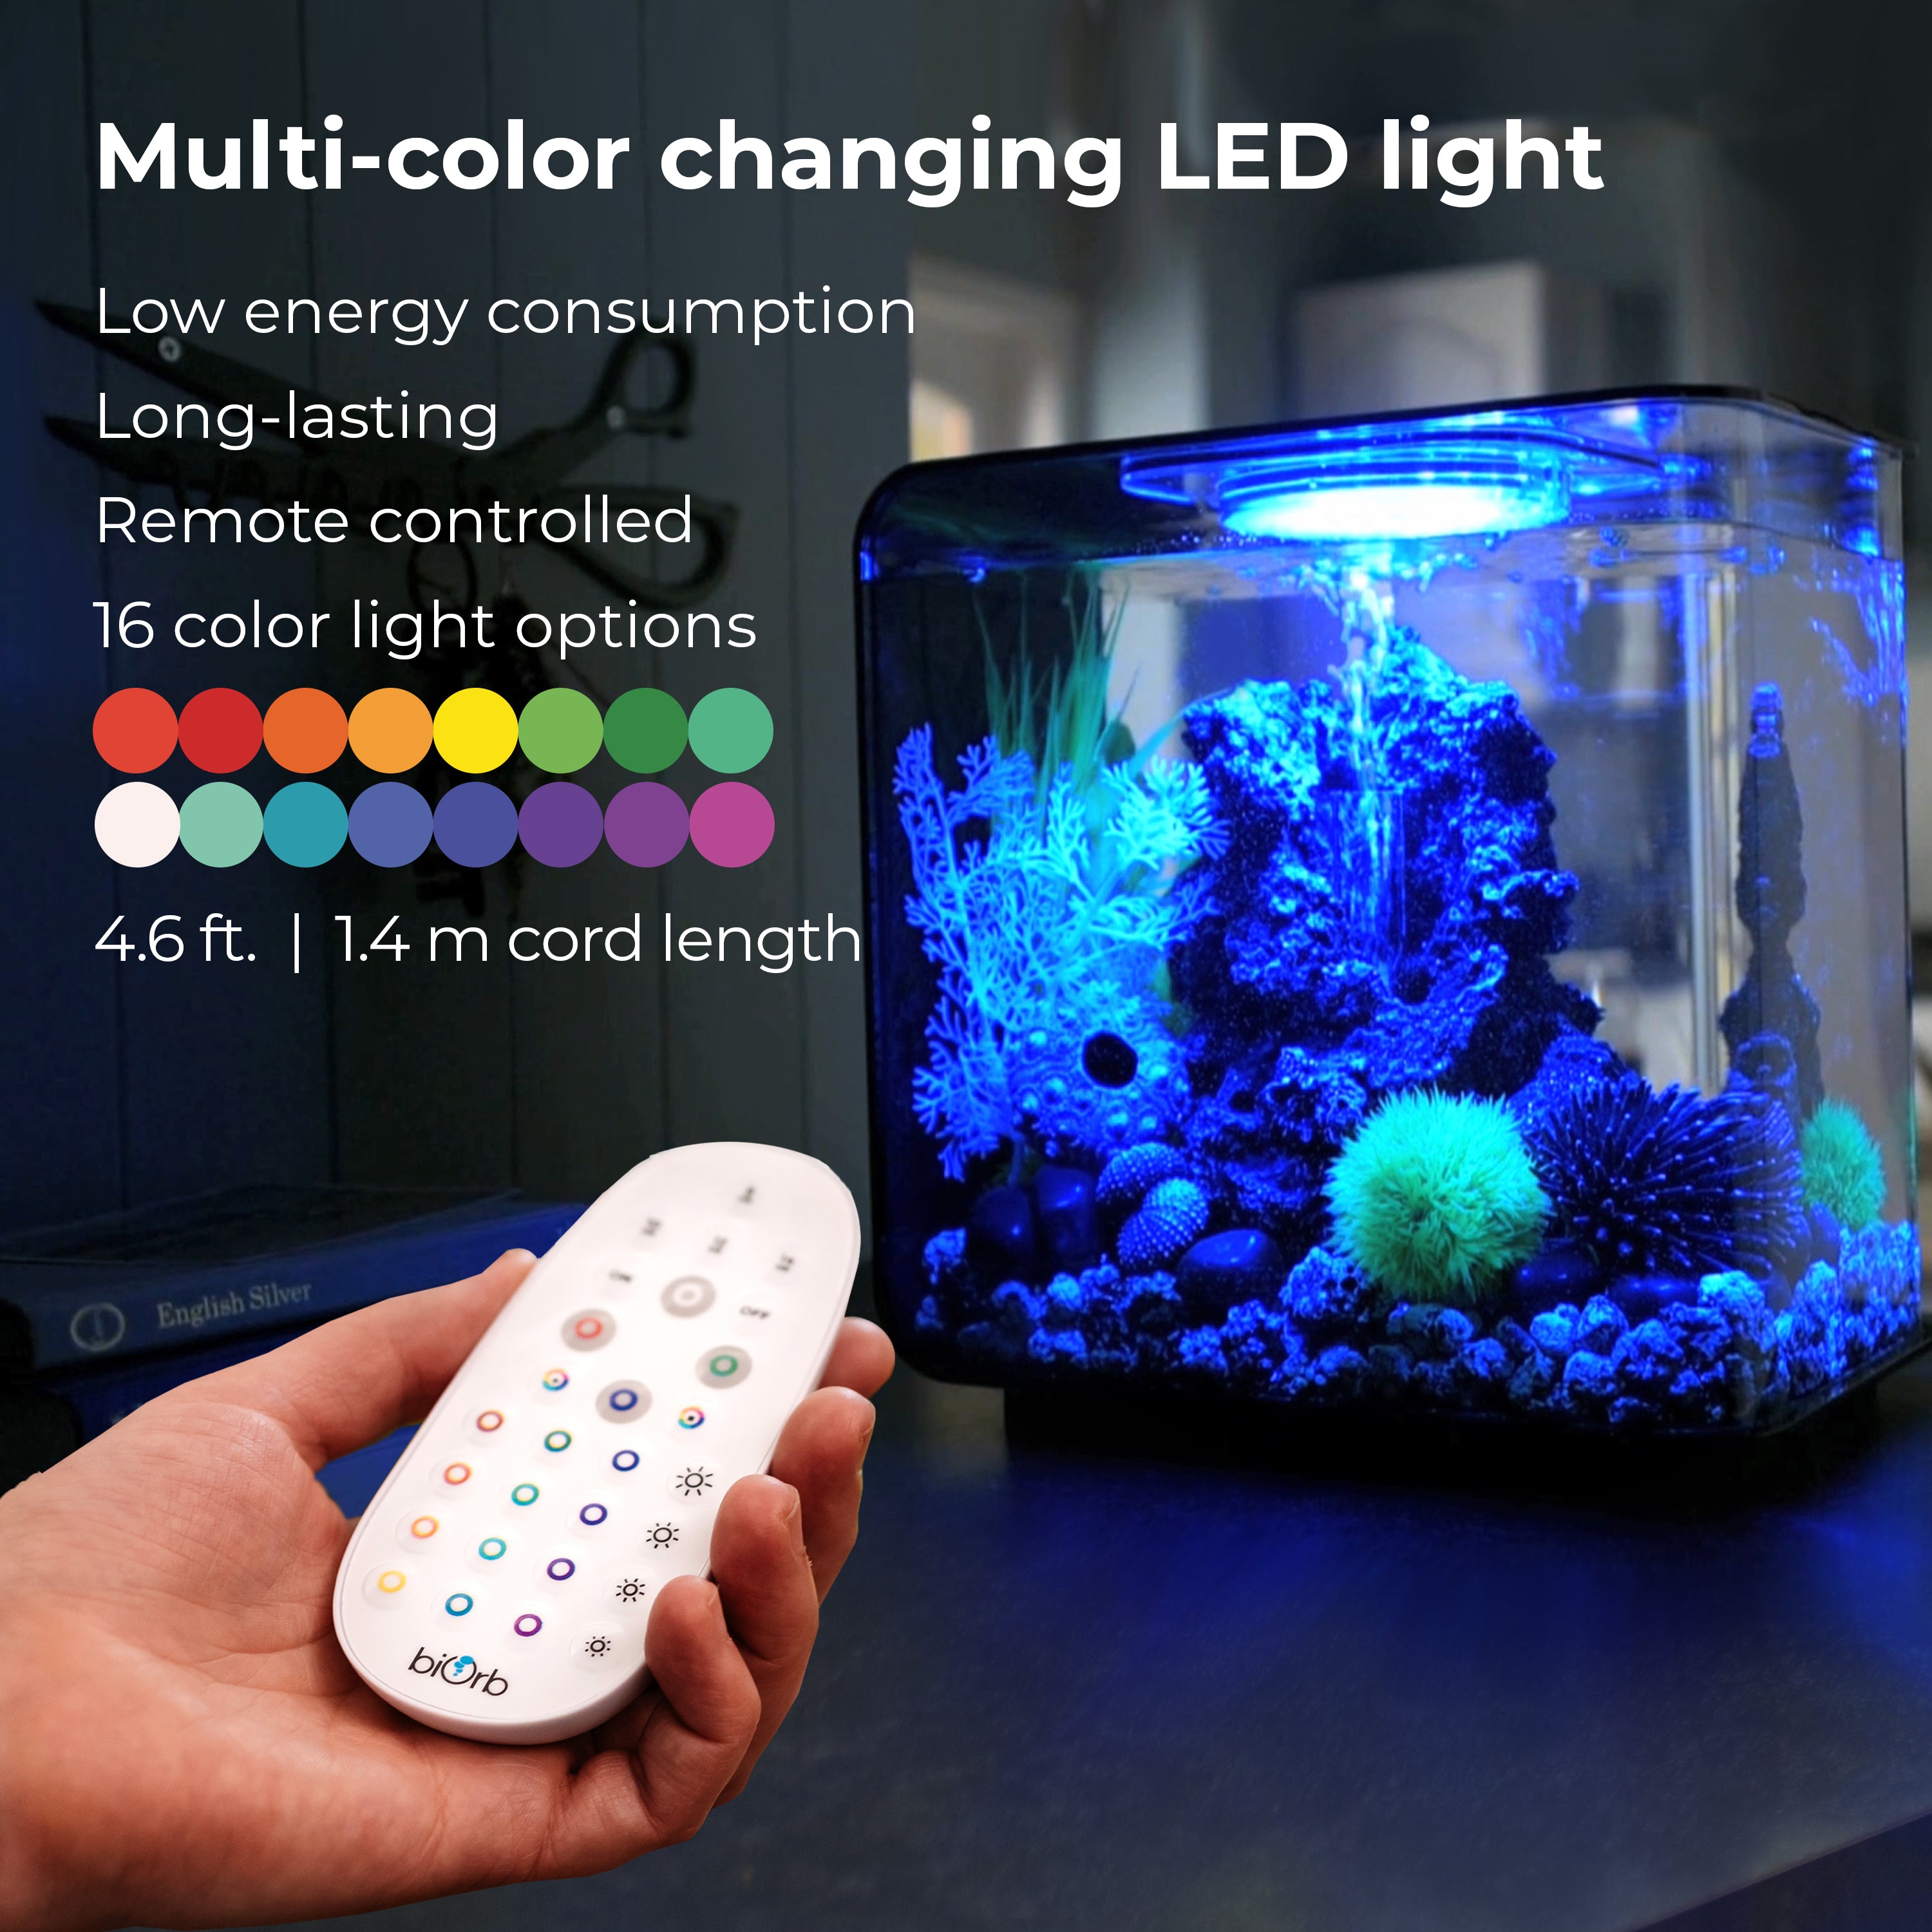 FLOW 15 Aquarium with MCR Light - 4 gallon features Multi-color changing LED light